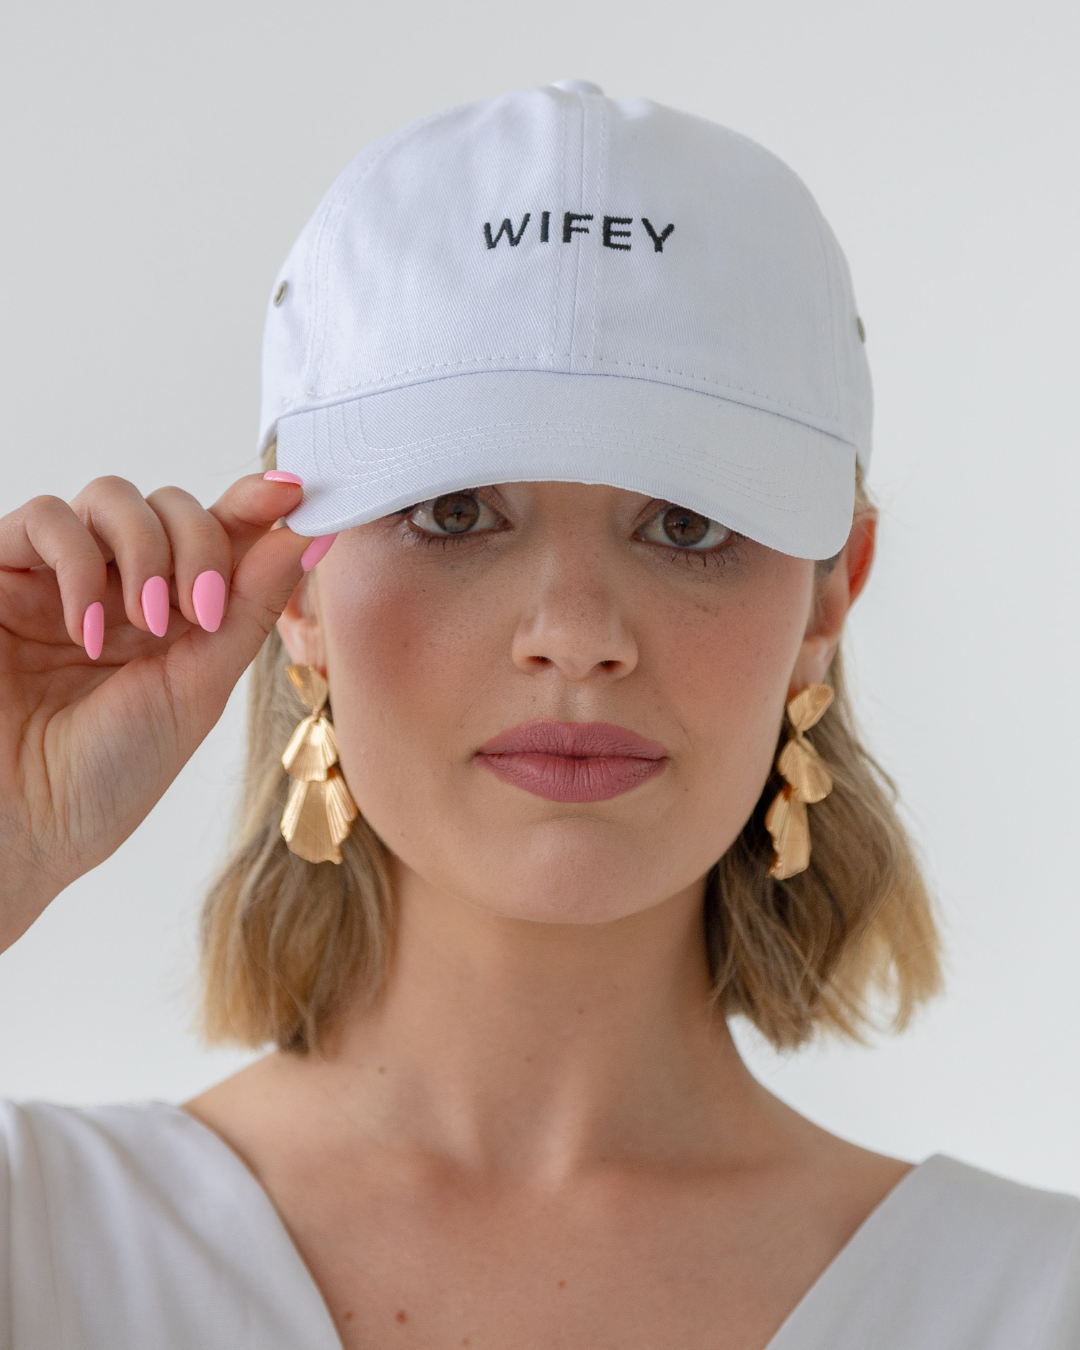 'WIFEY' Cap